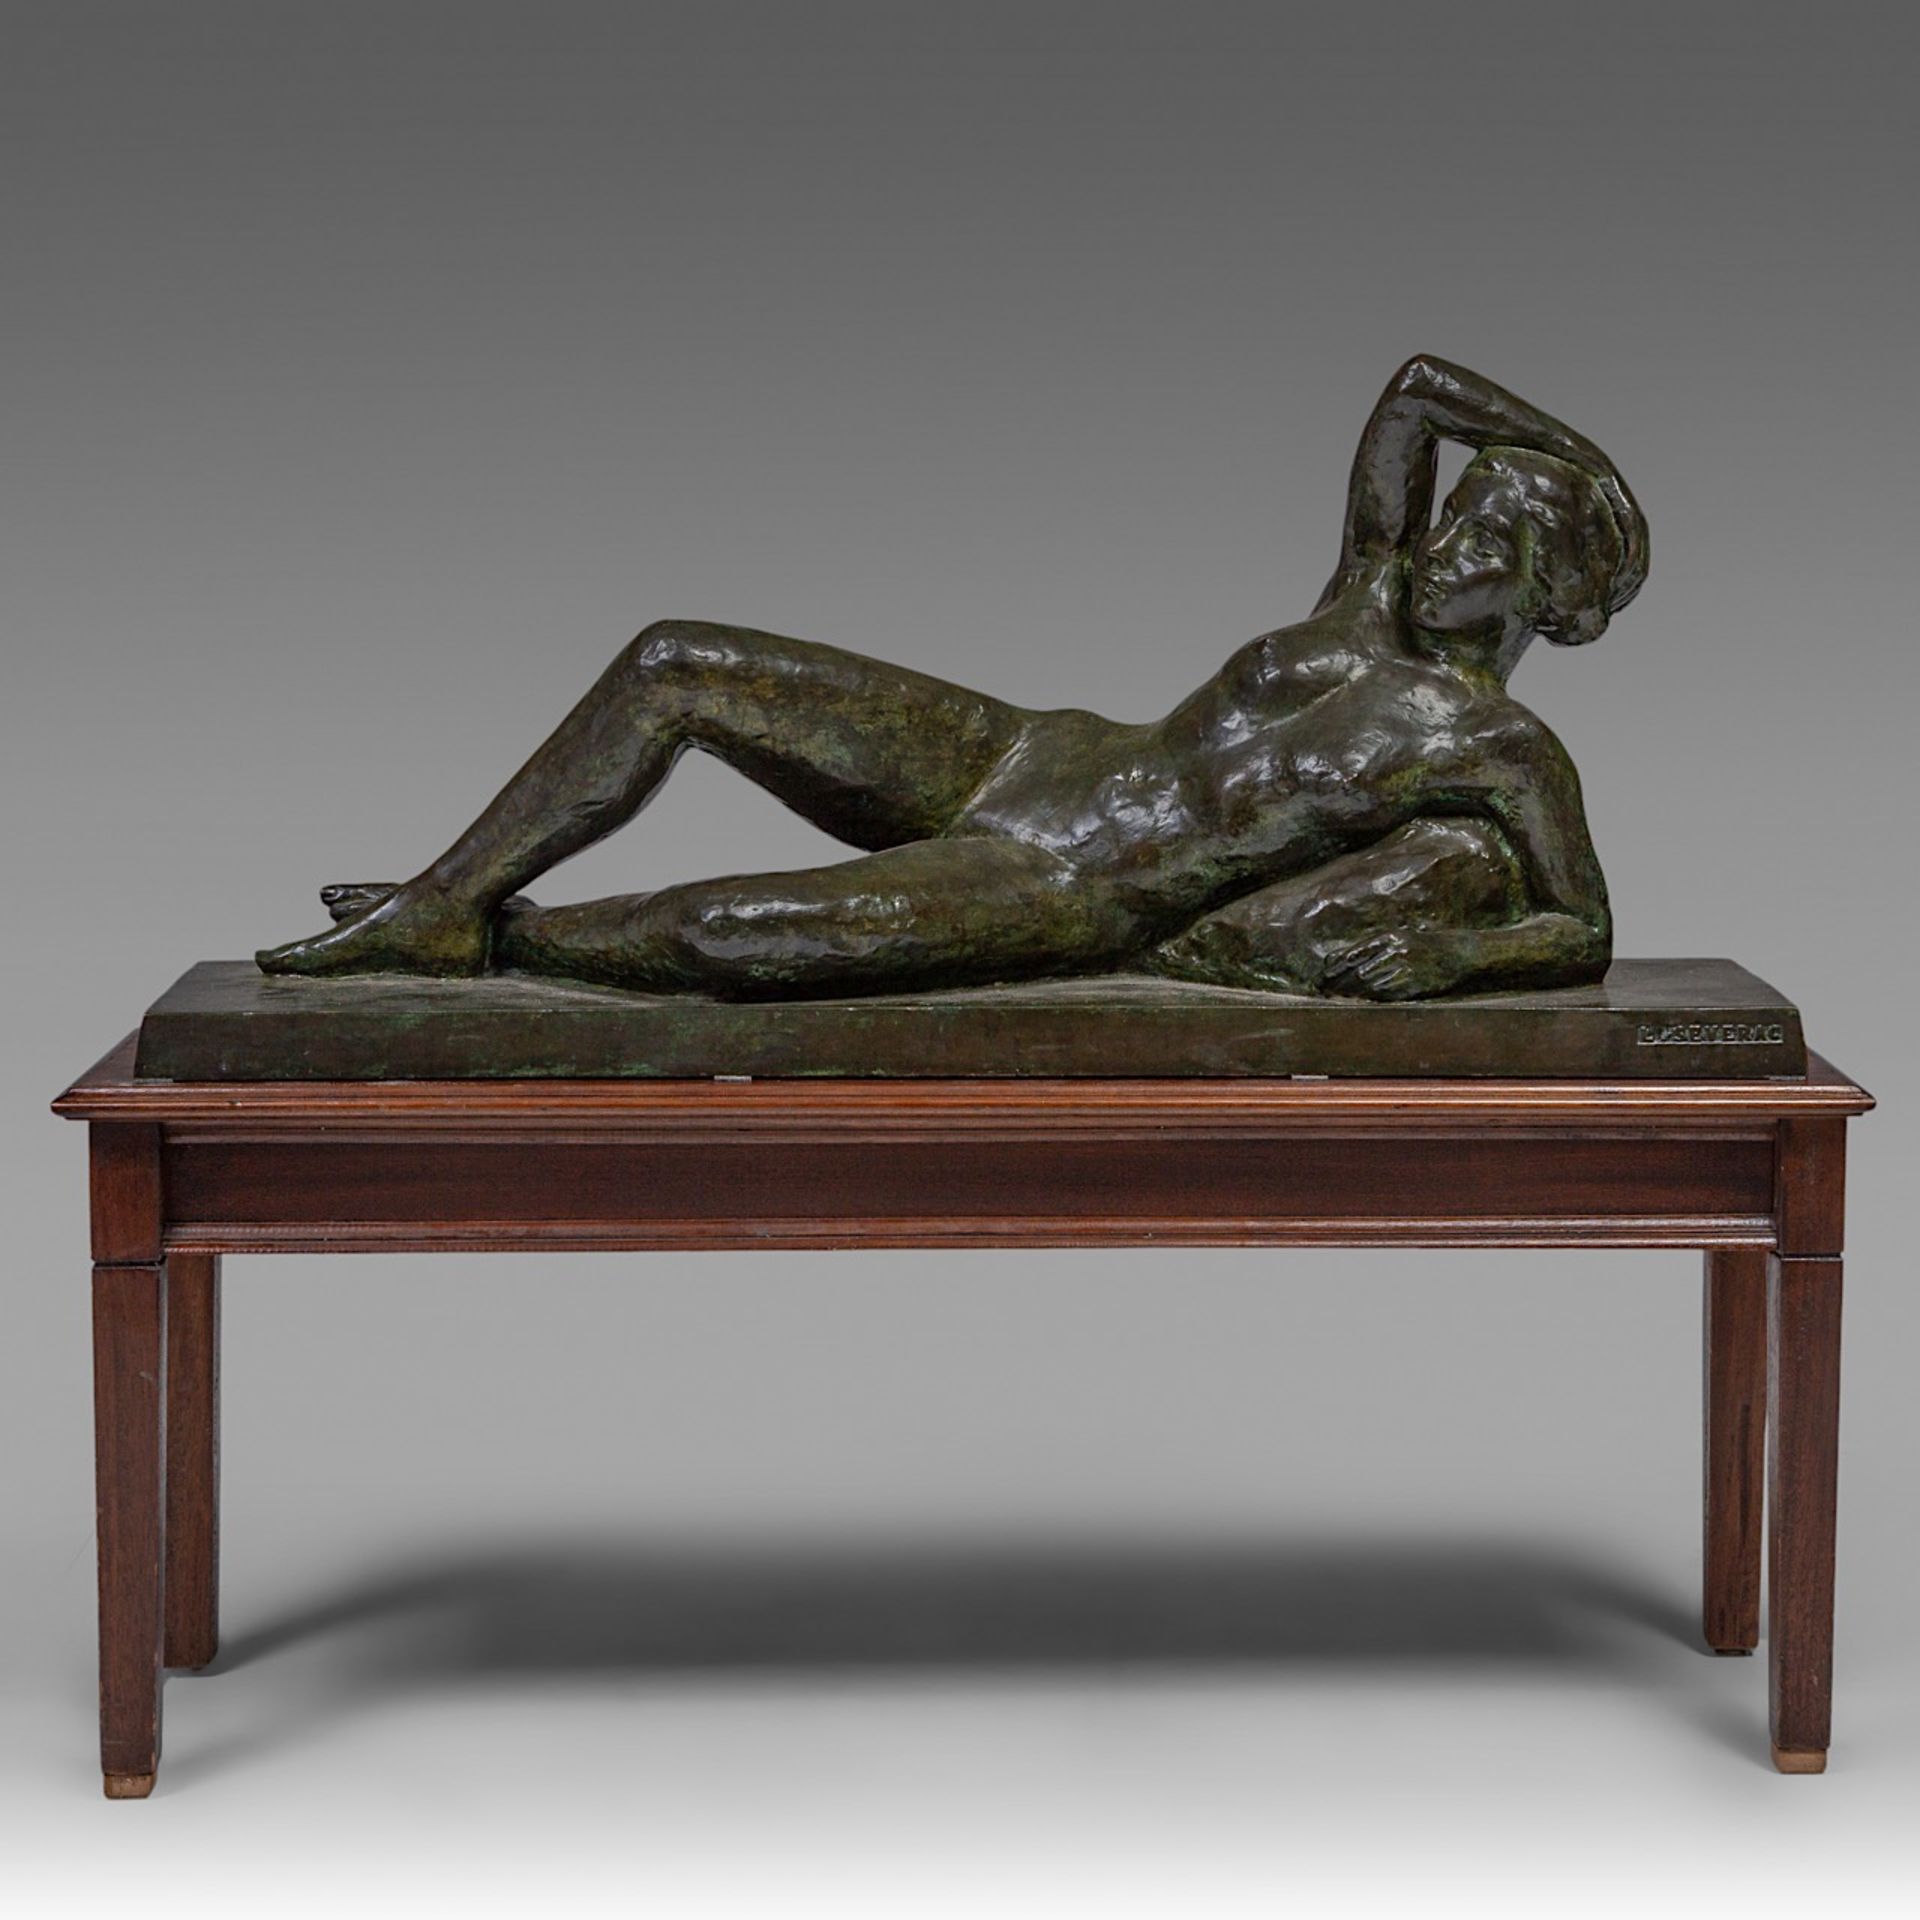 Leon Severac (1903-1996), reclining female nude, patinated bronze, H 43 - W 98 cm